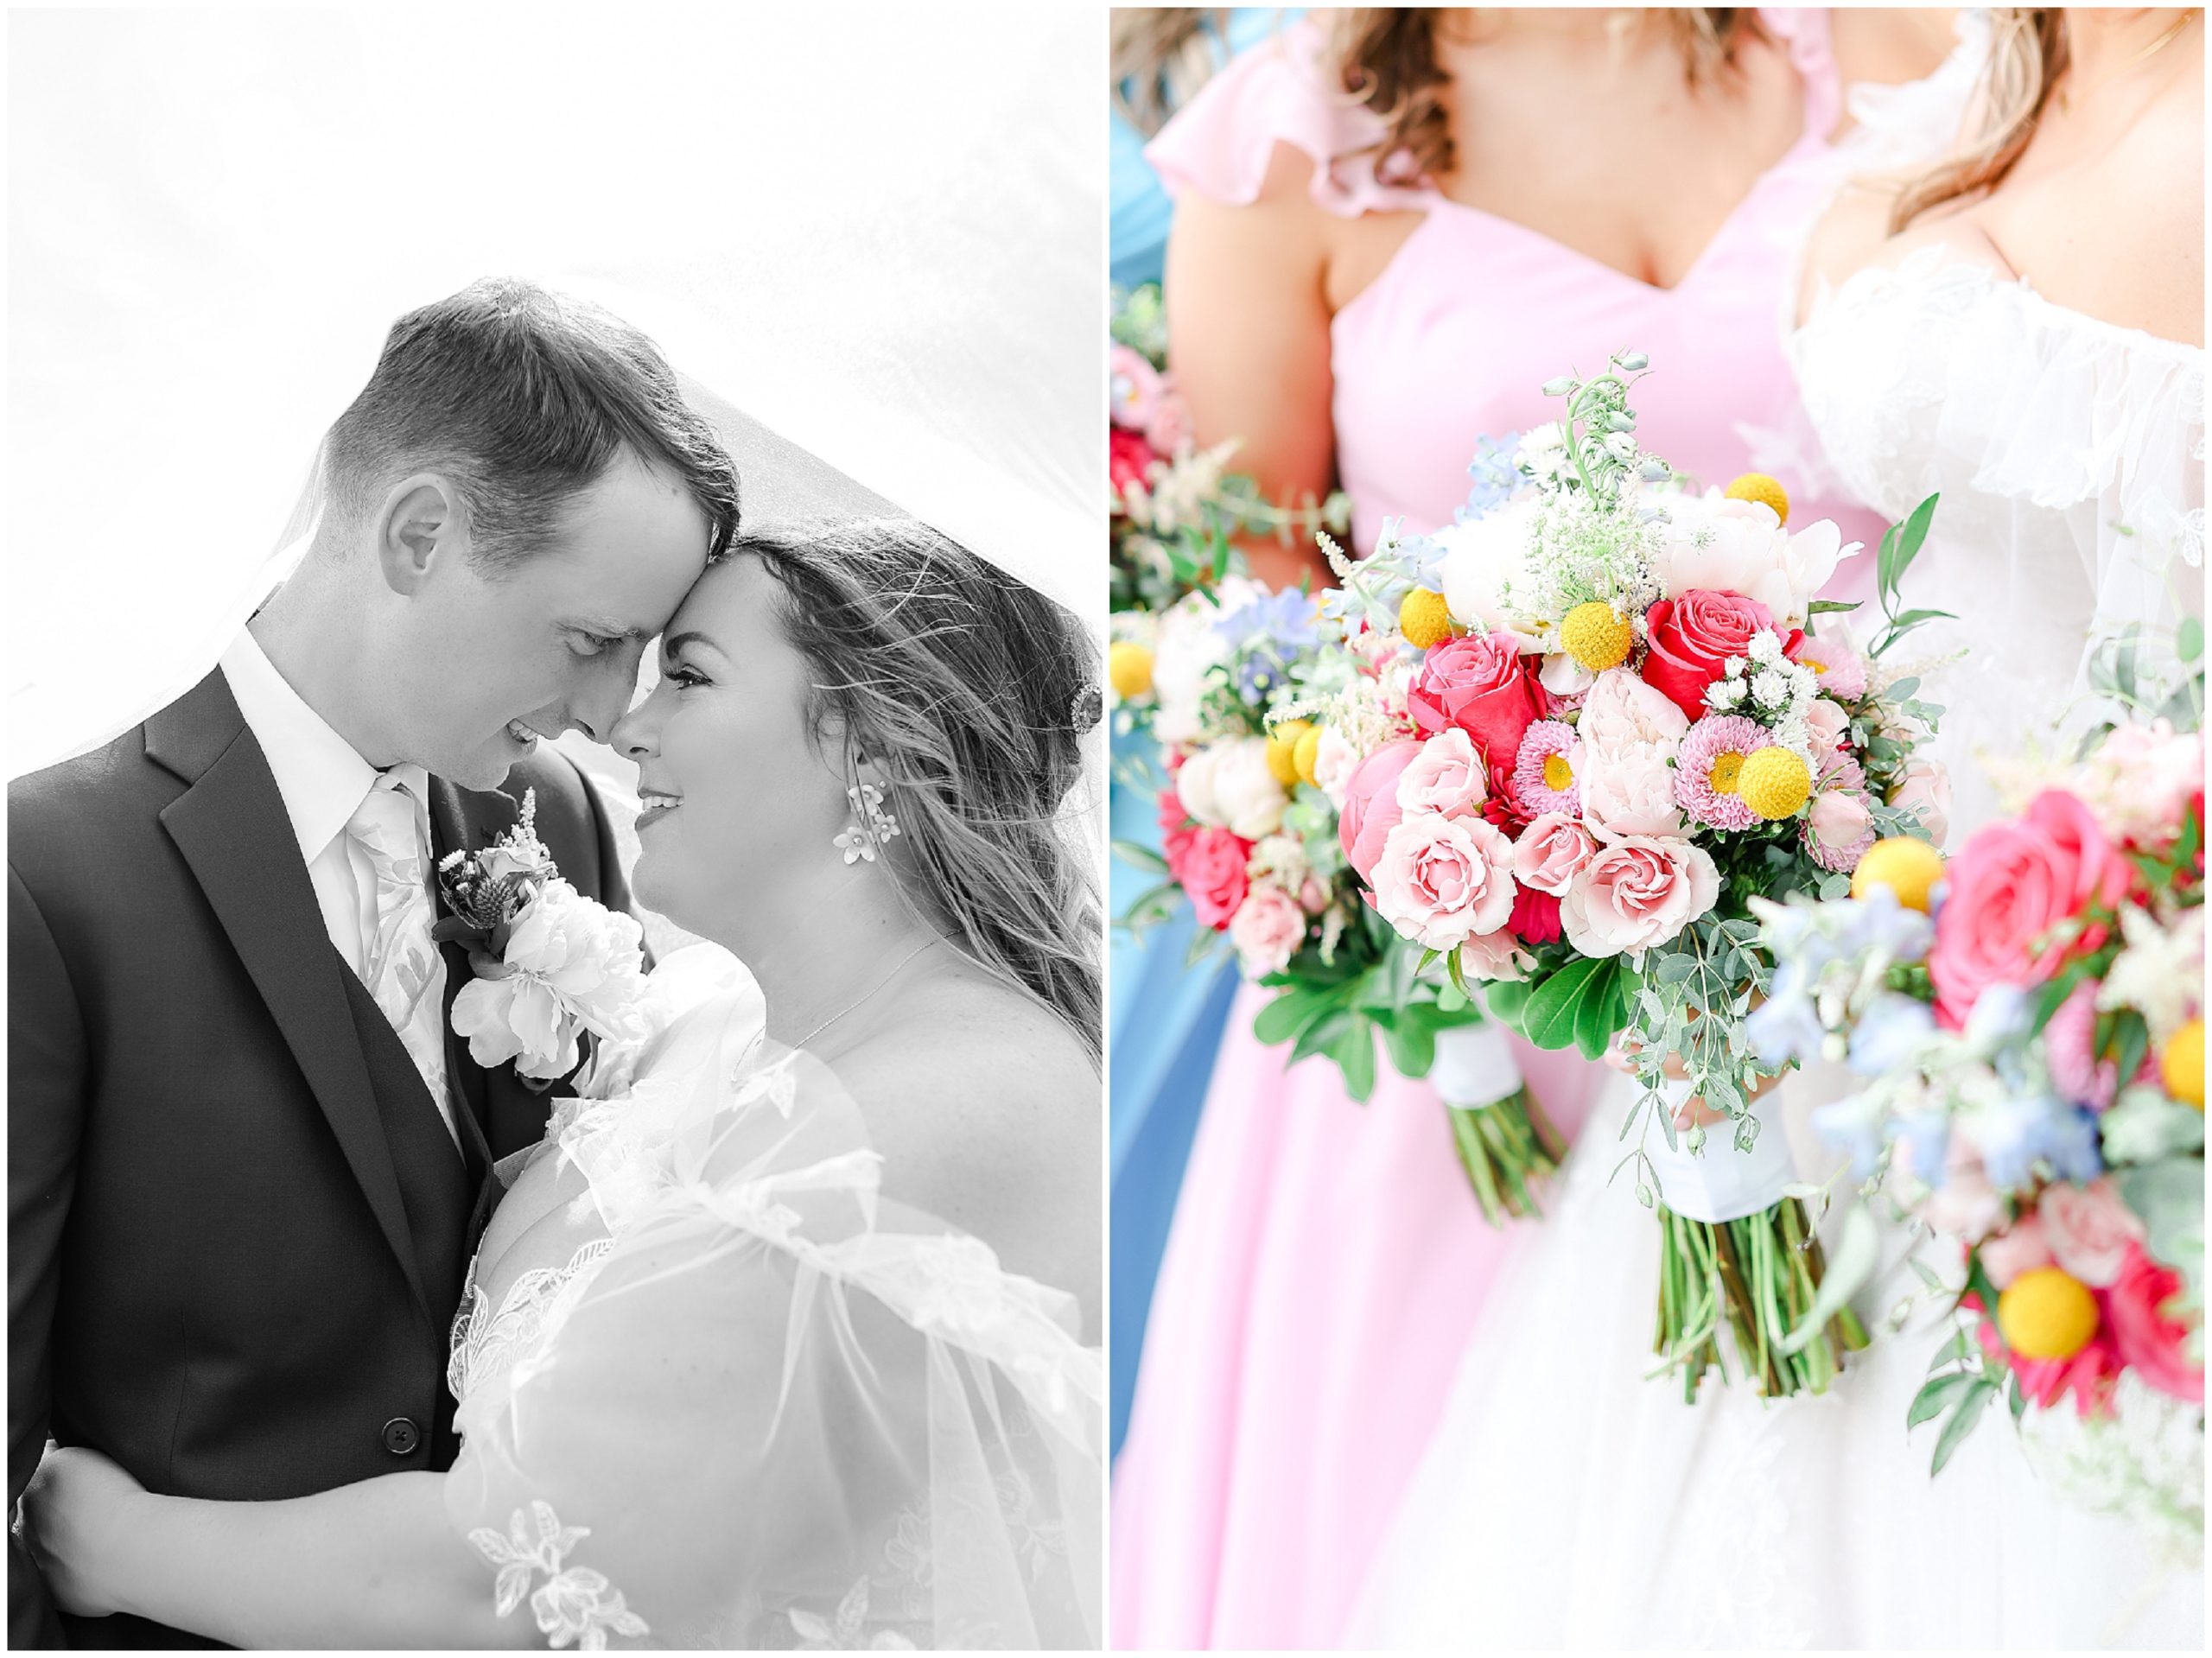 Colorful and Joyful Wedding Photography - Kansas City Wedding Photographer - The Rhapsody - bride and groom wedding portraits - colorful bridal party